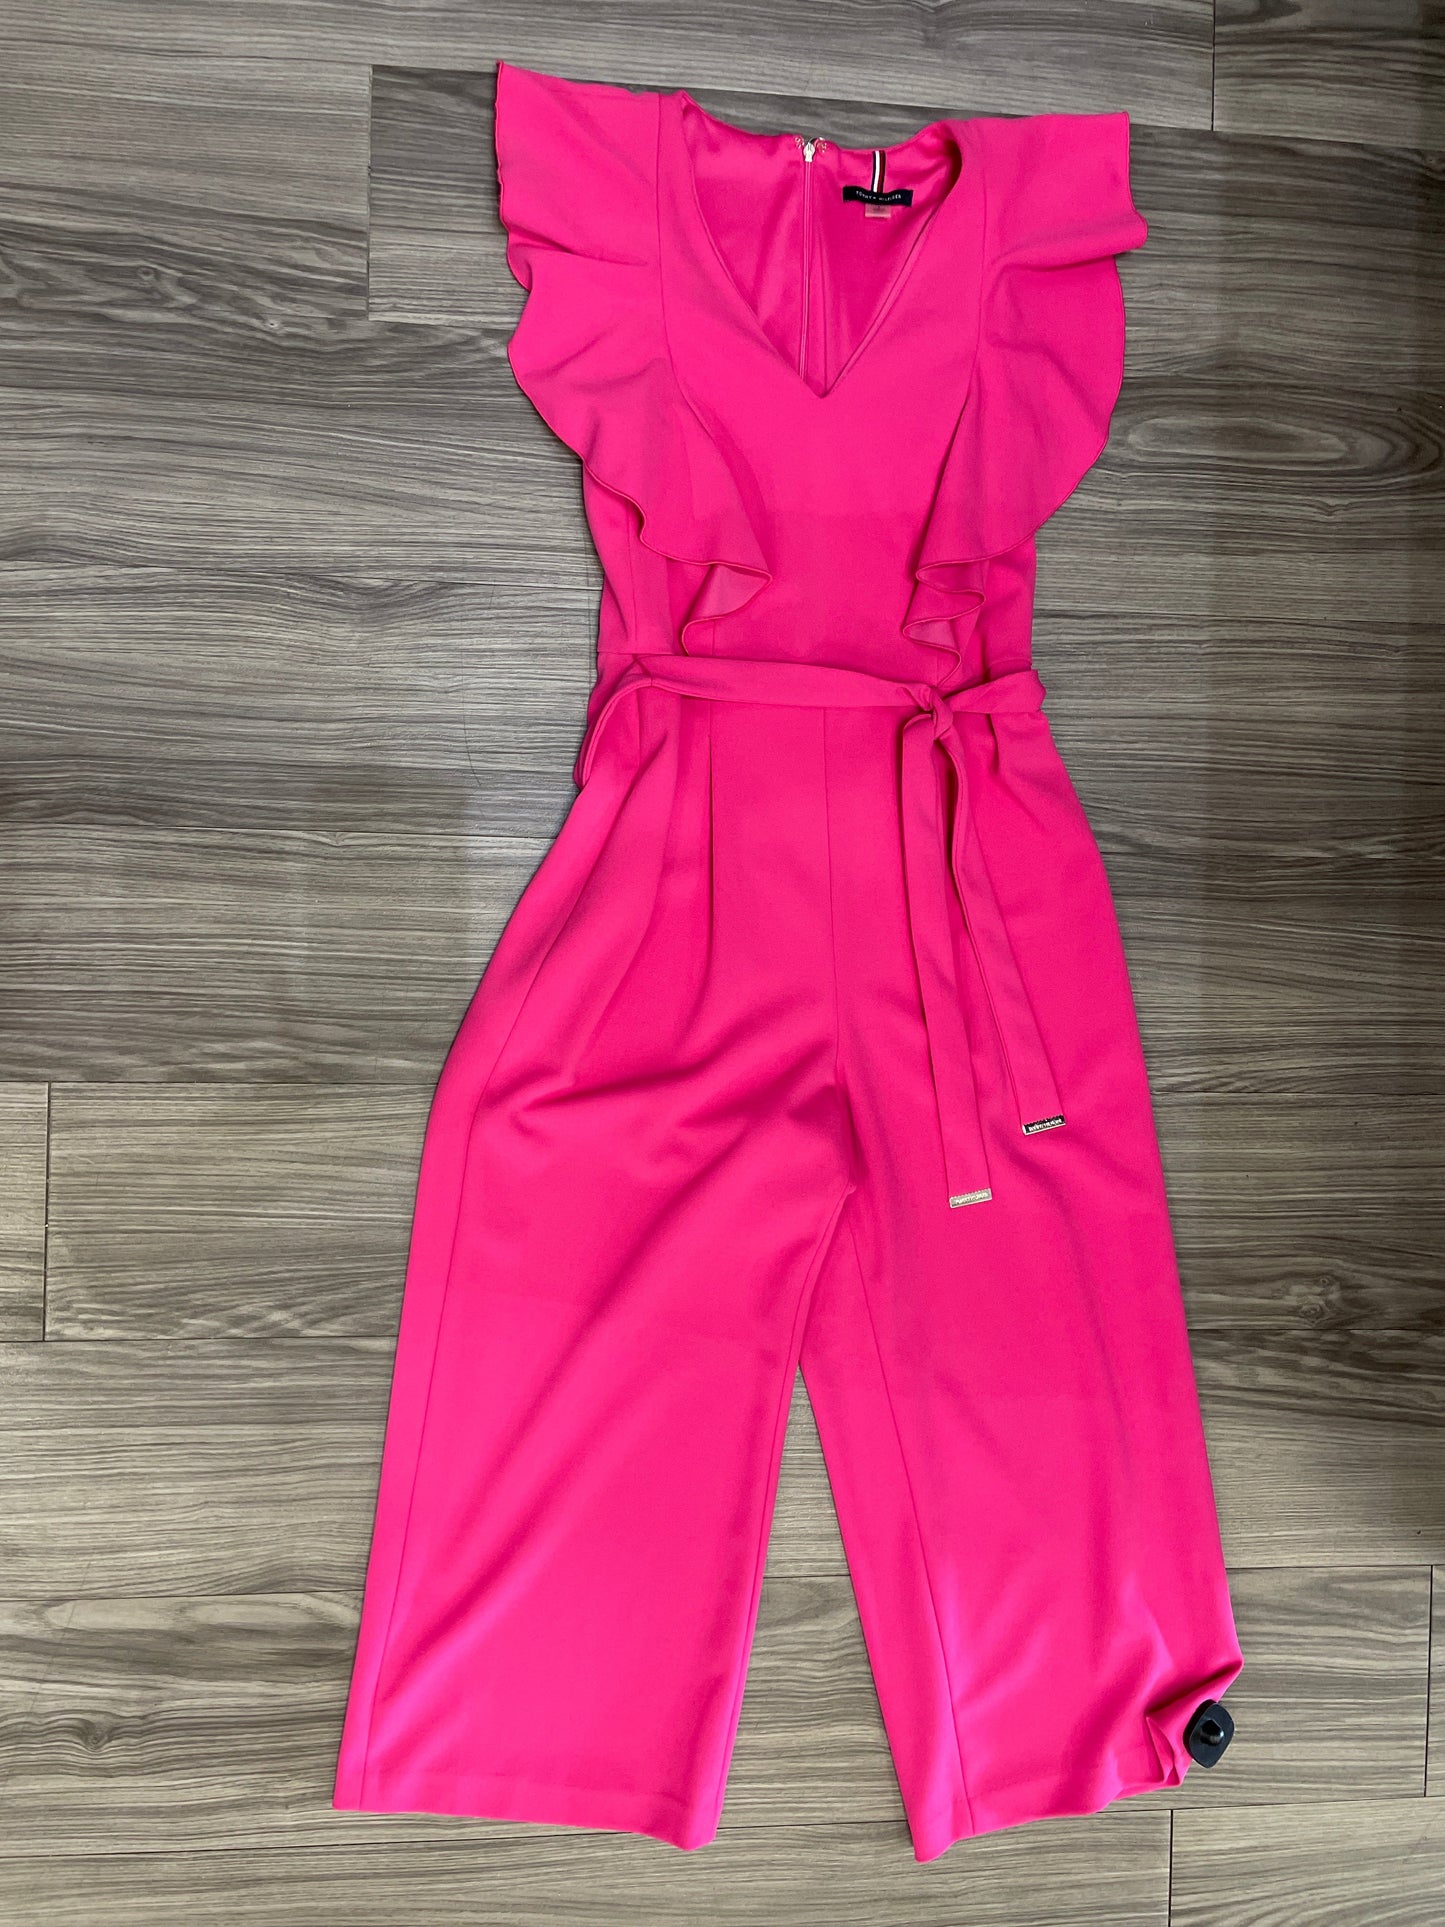 Pink Jumpsuit Tommy Hilfiger, Size 4